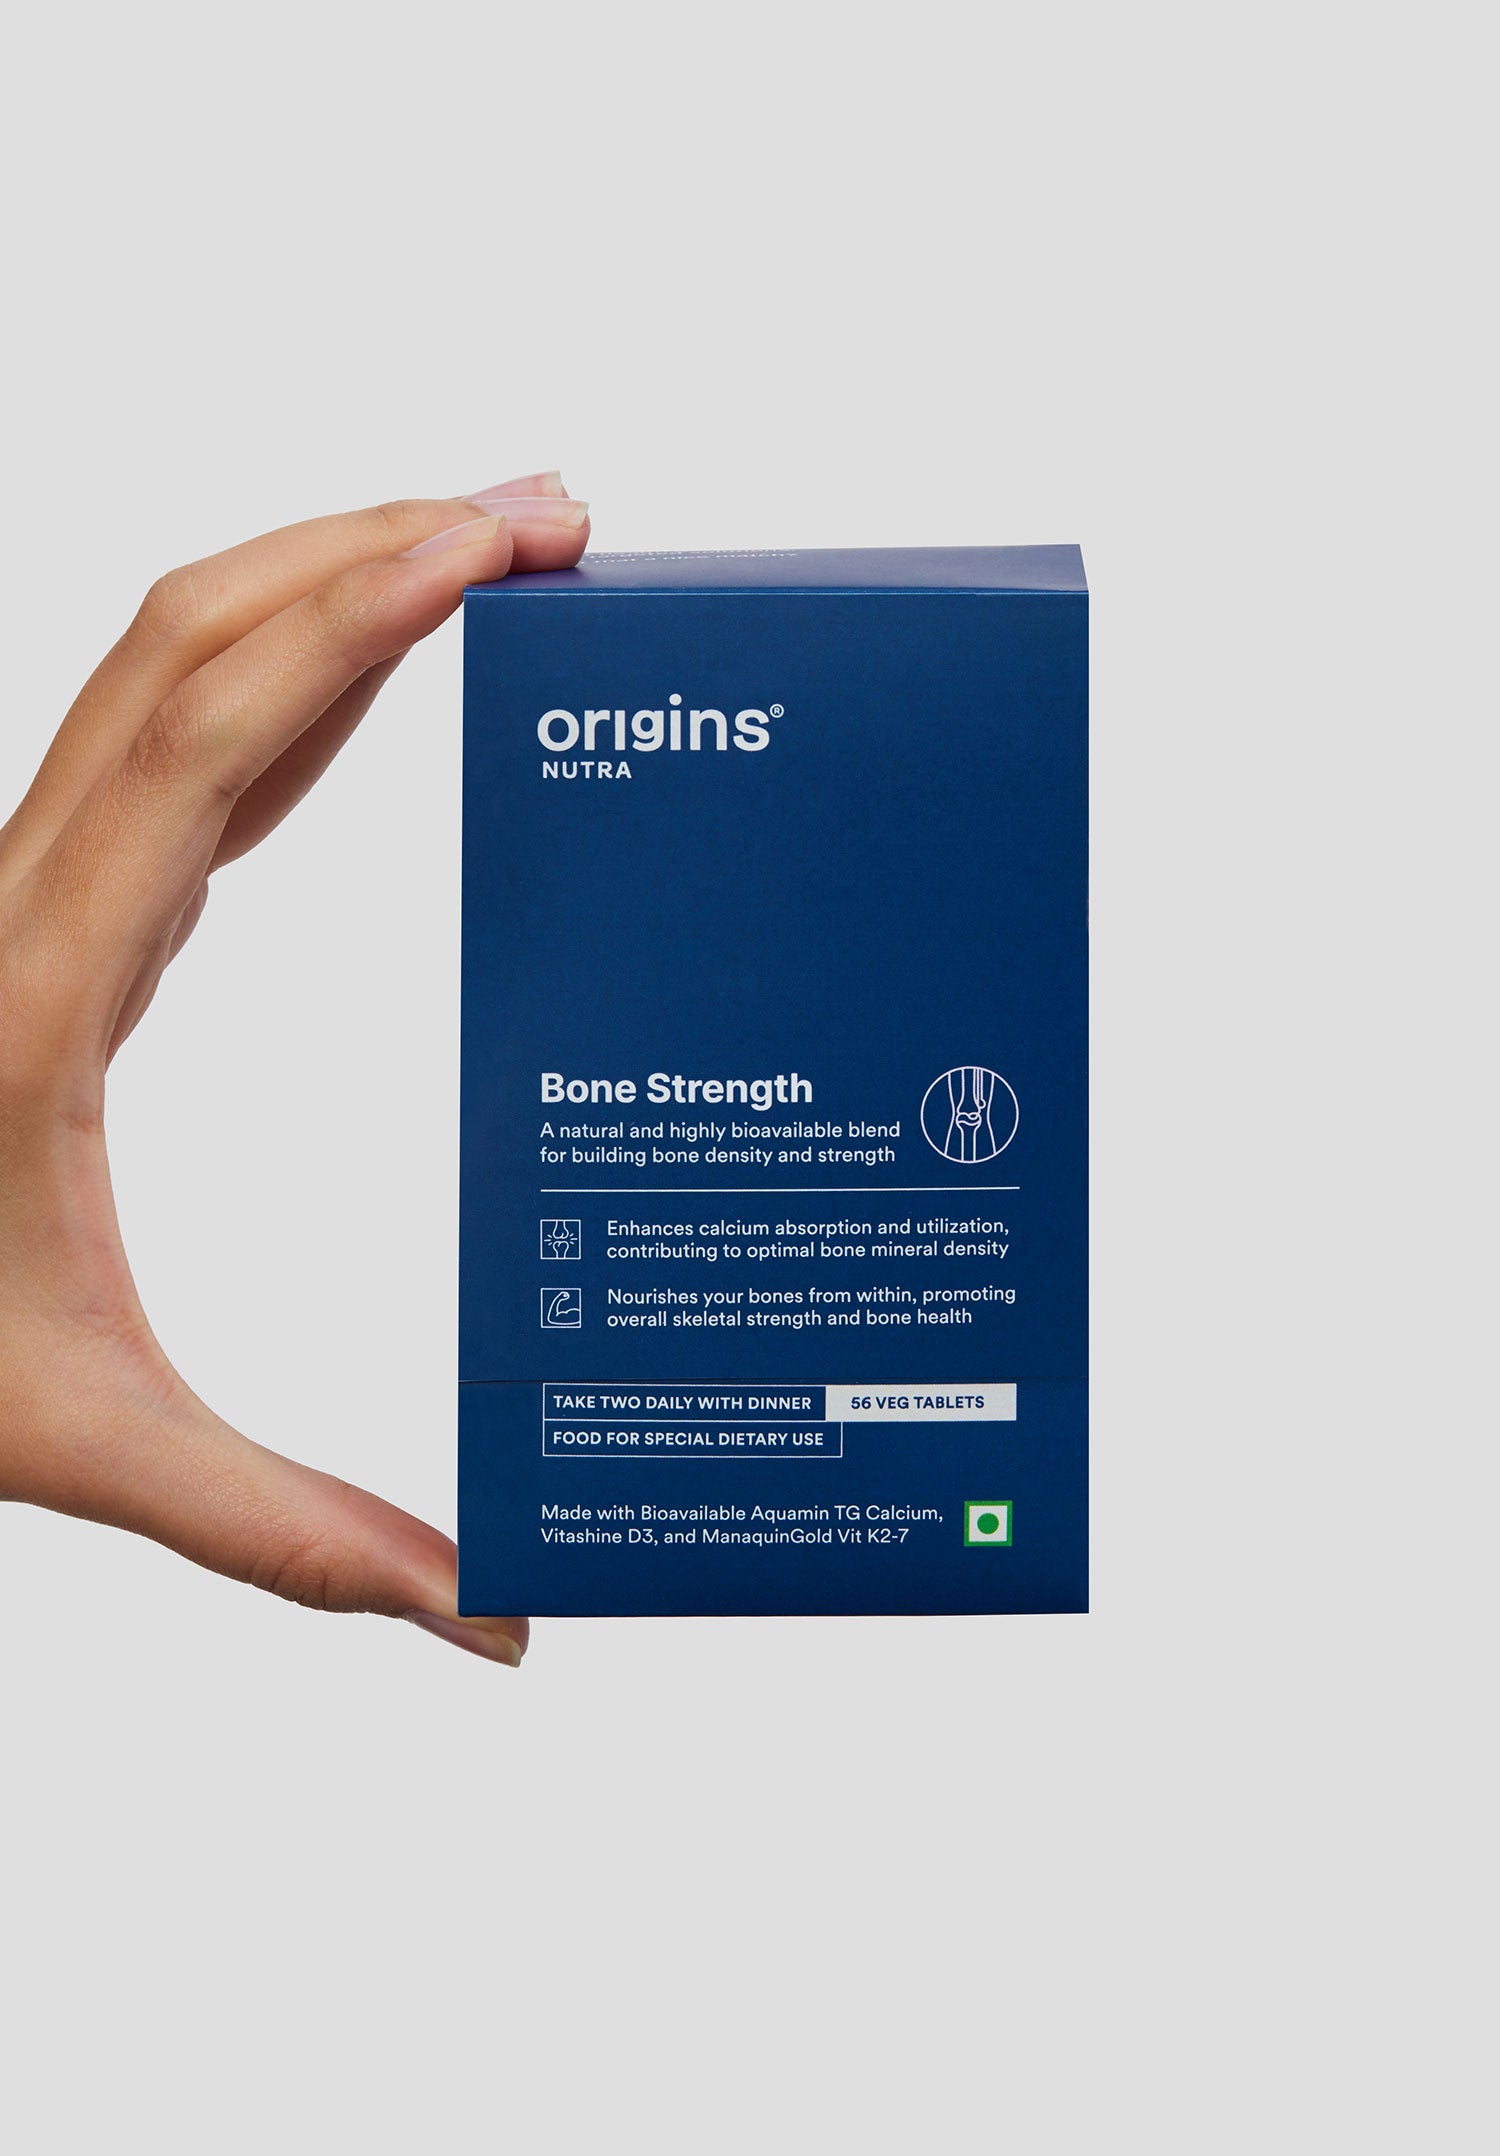 front image of origins nutra bone strength supplement